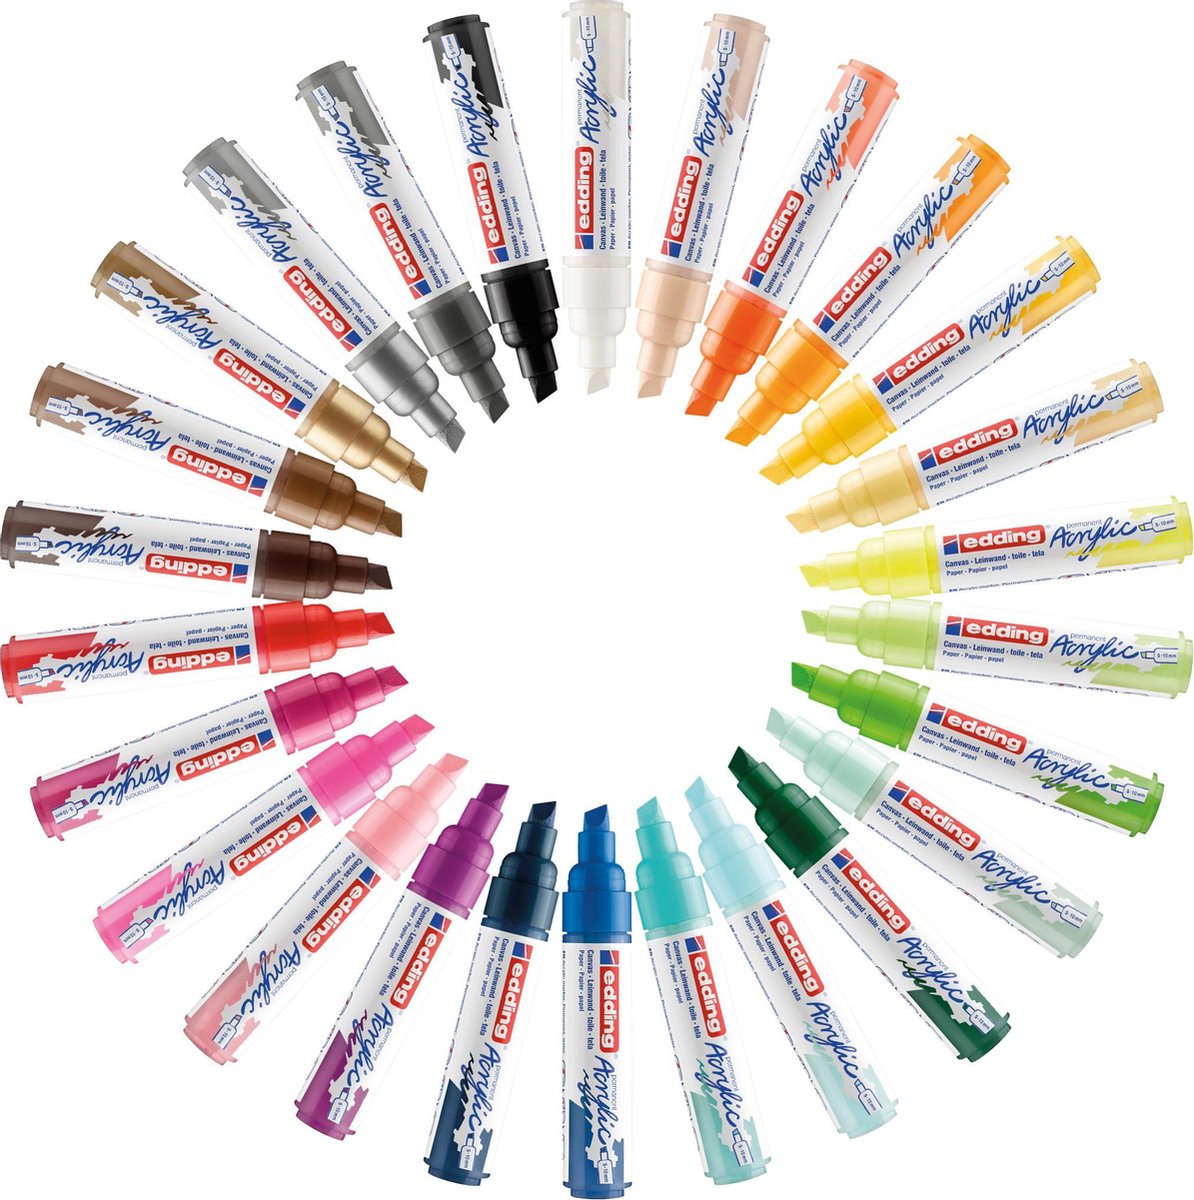 Edding 5000 acryl verfstiften - 26 kleuren acrylmarkers - brede beitelpunt